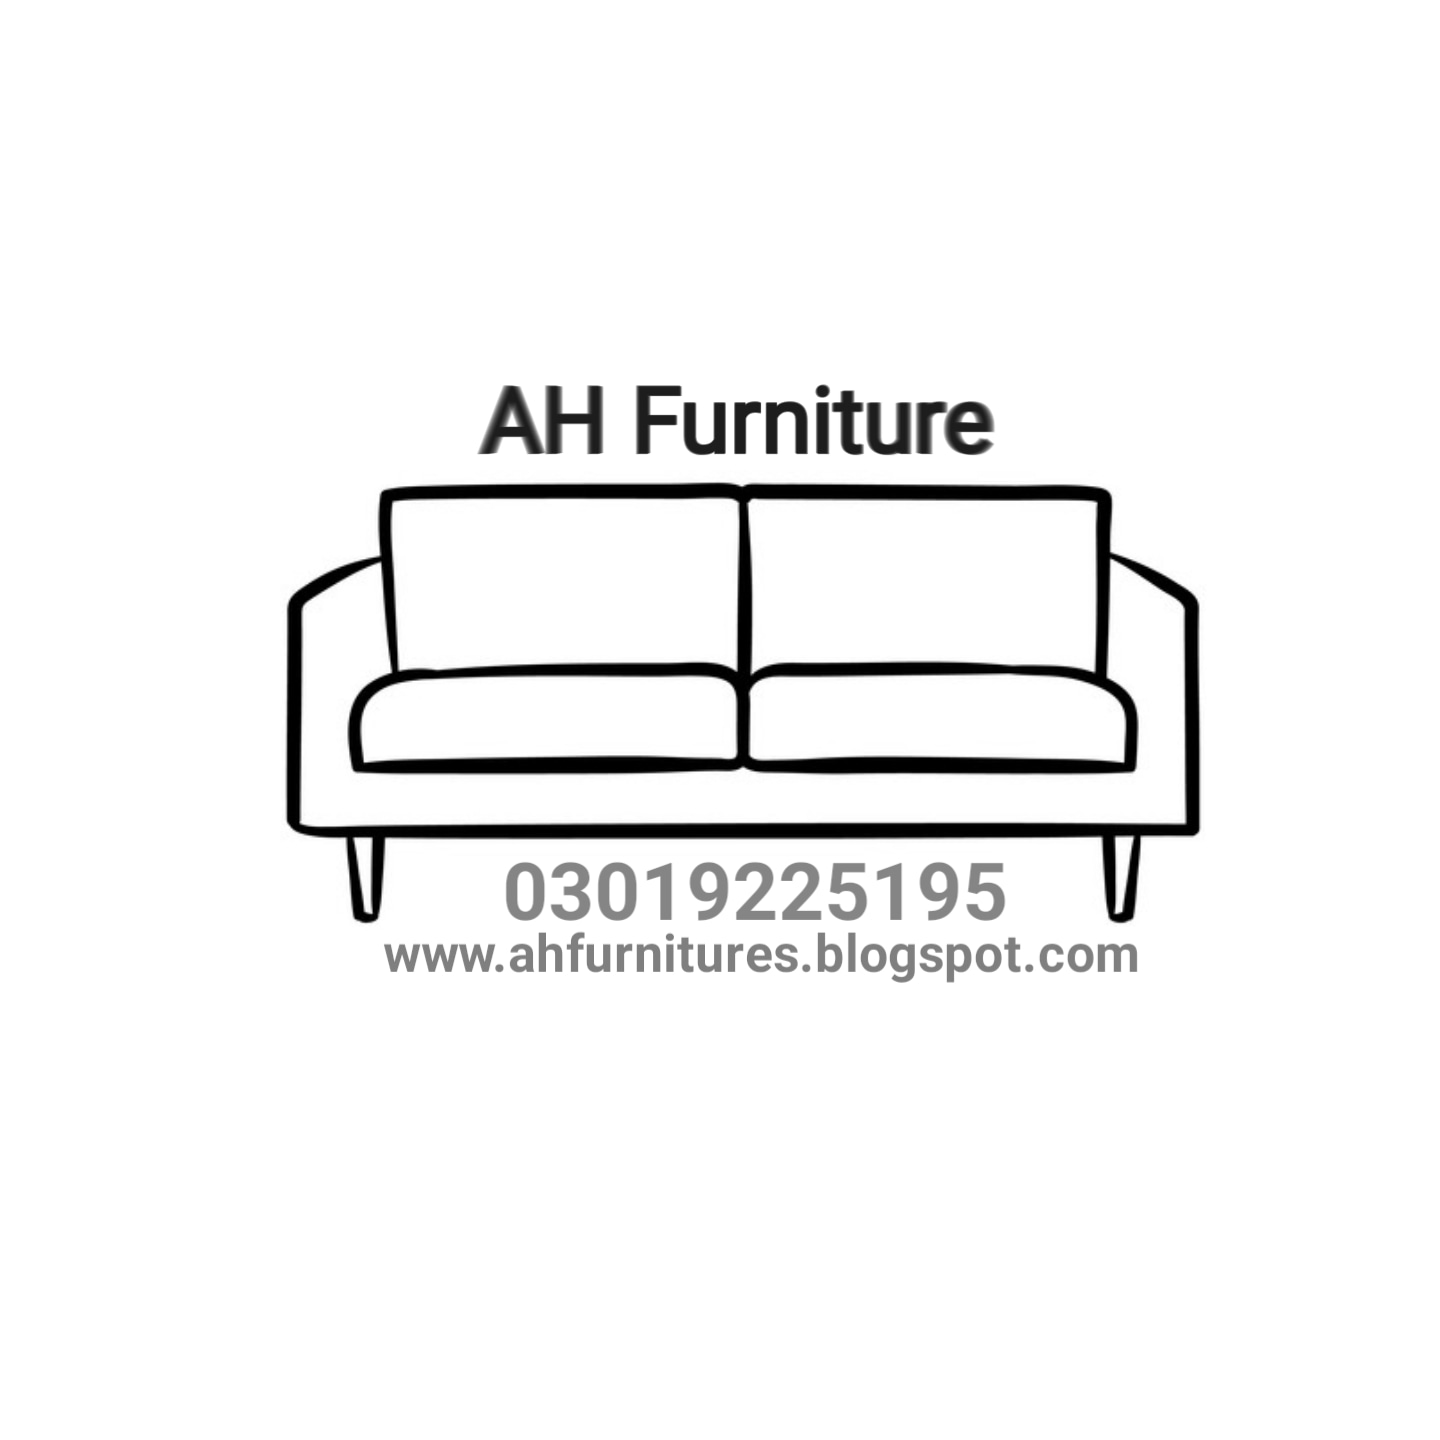 AH Furniture